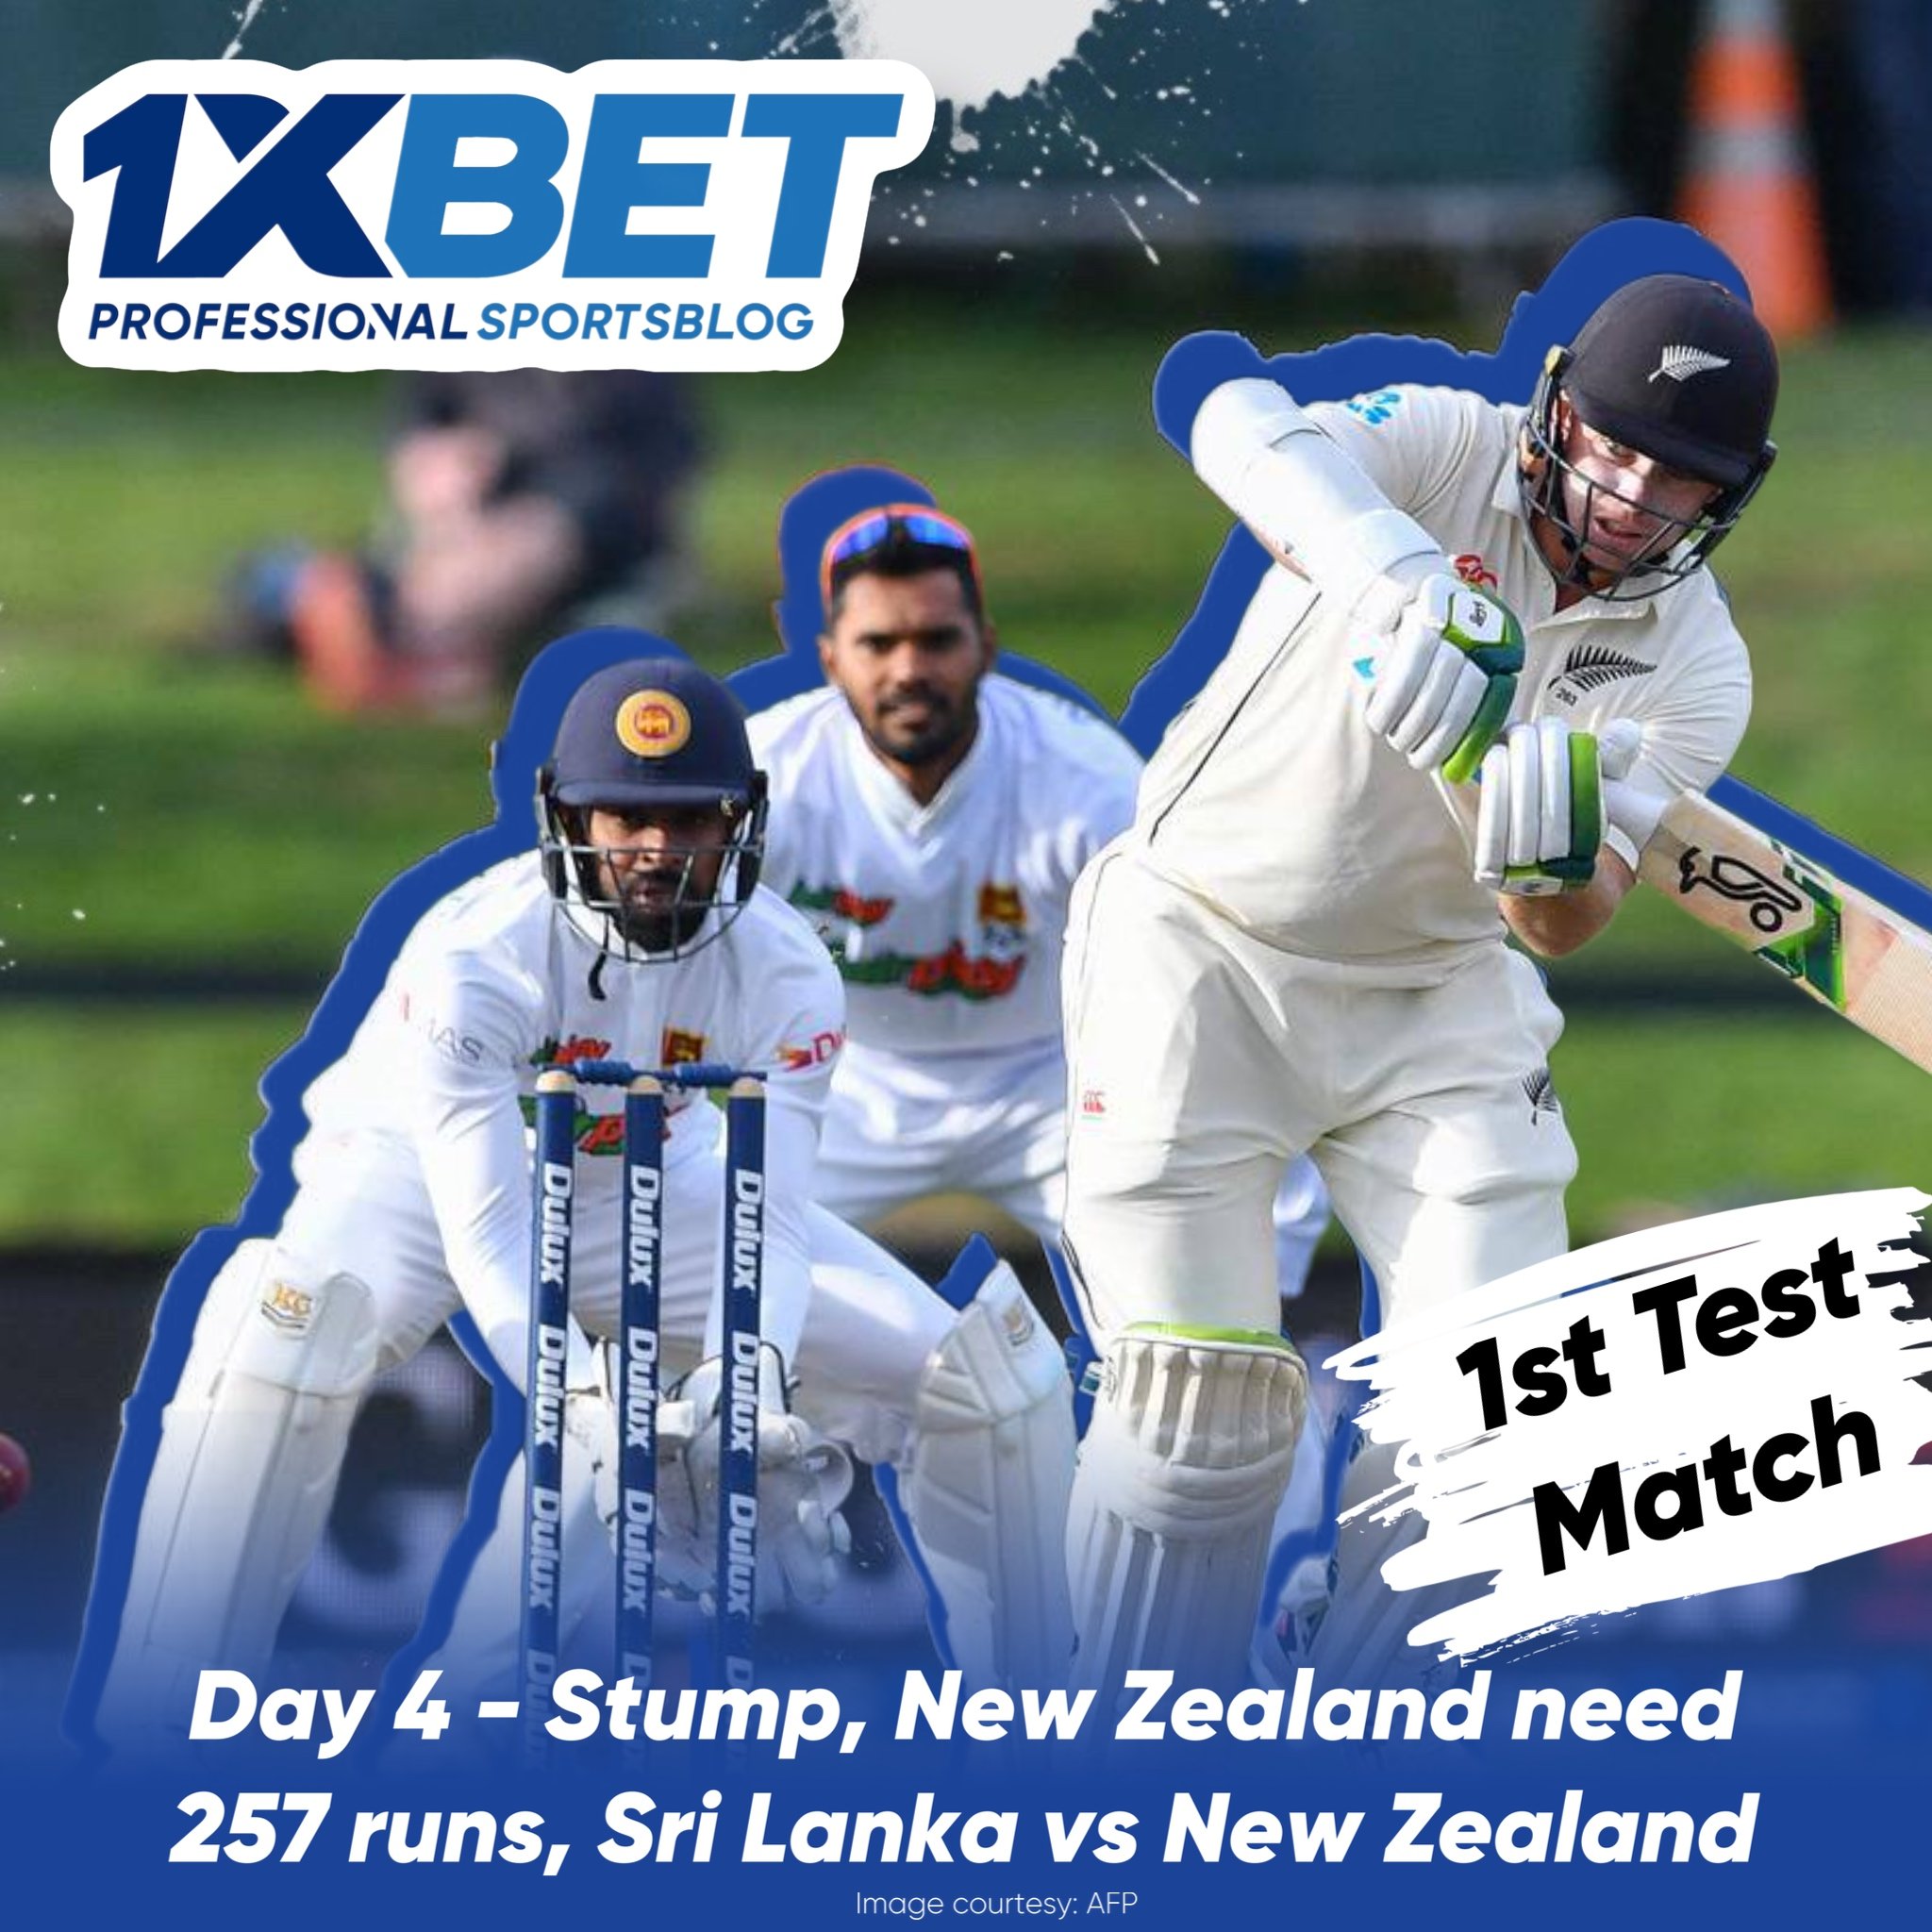 Day 4 - Stump, New Zealand need 257 runs